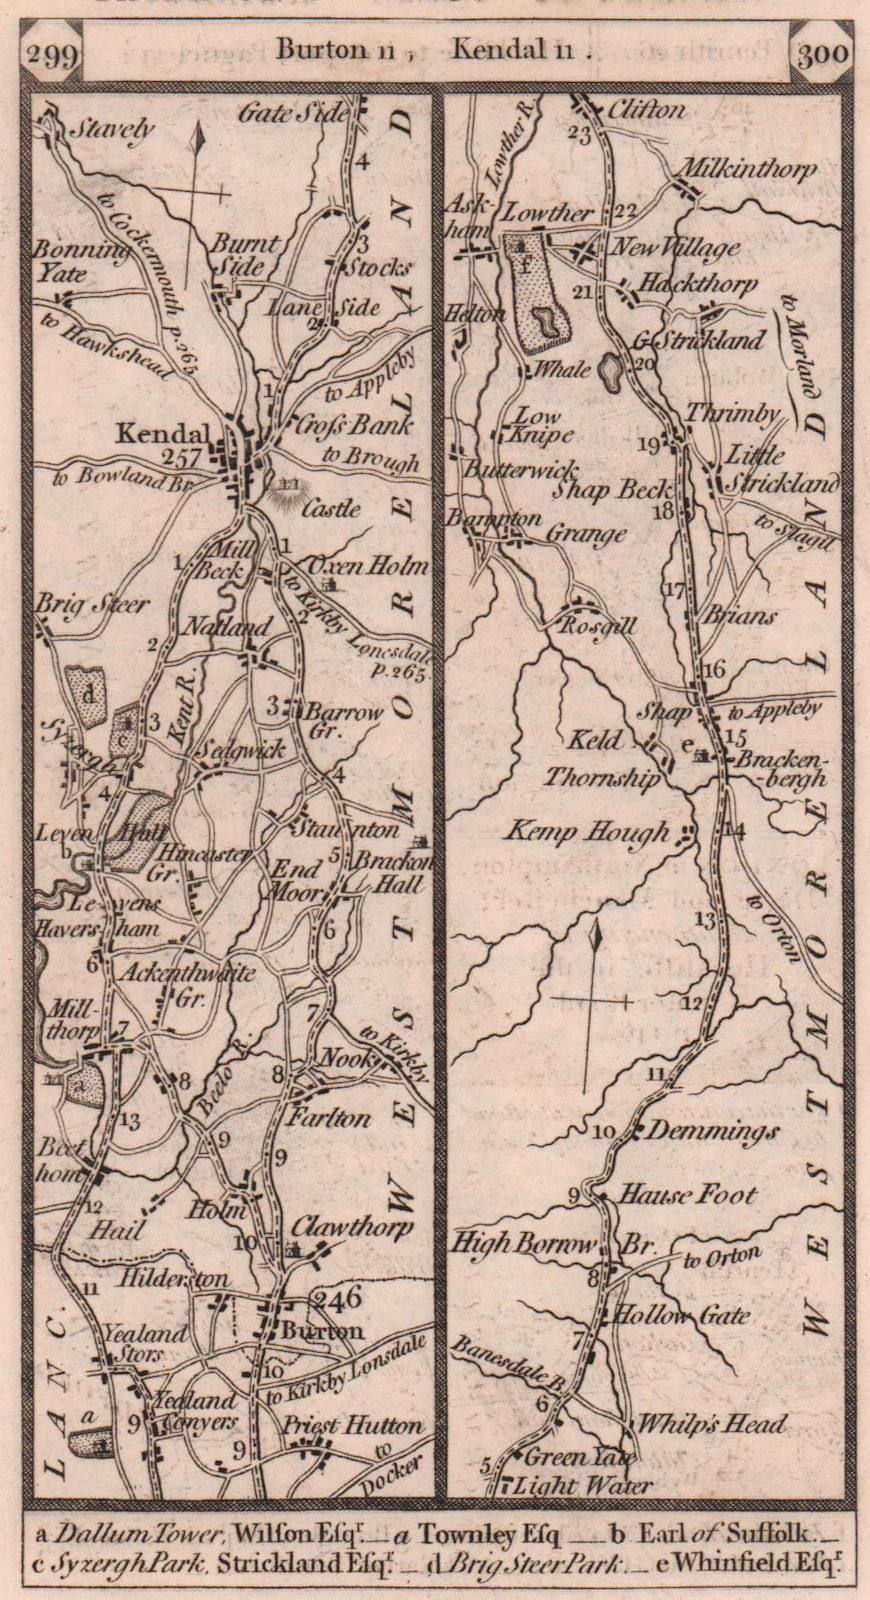 Burton-in-Kendal - Kendal - Shap - Melkinthorpe road strip map PATERSON 1803